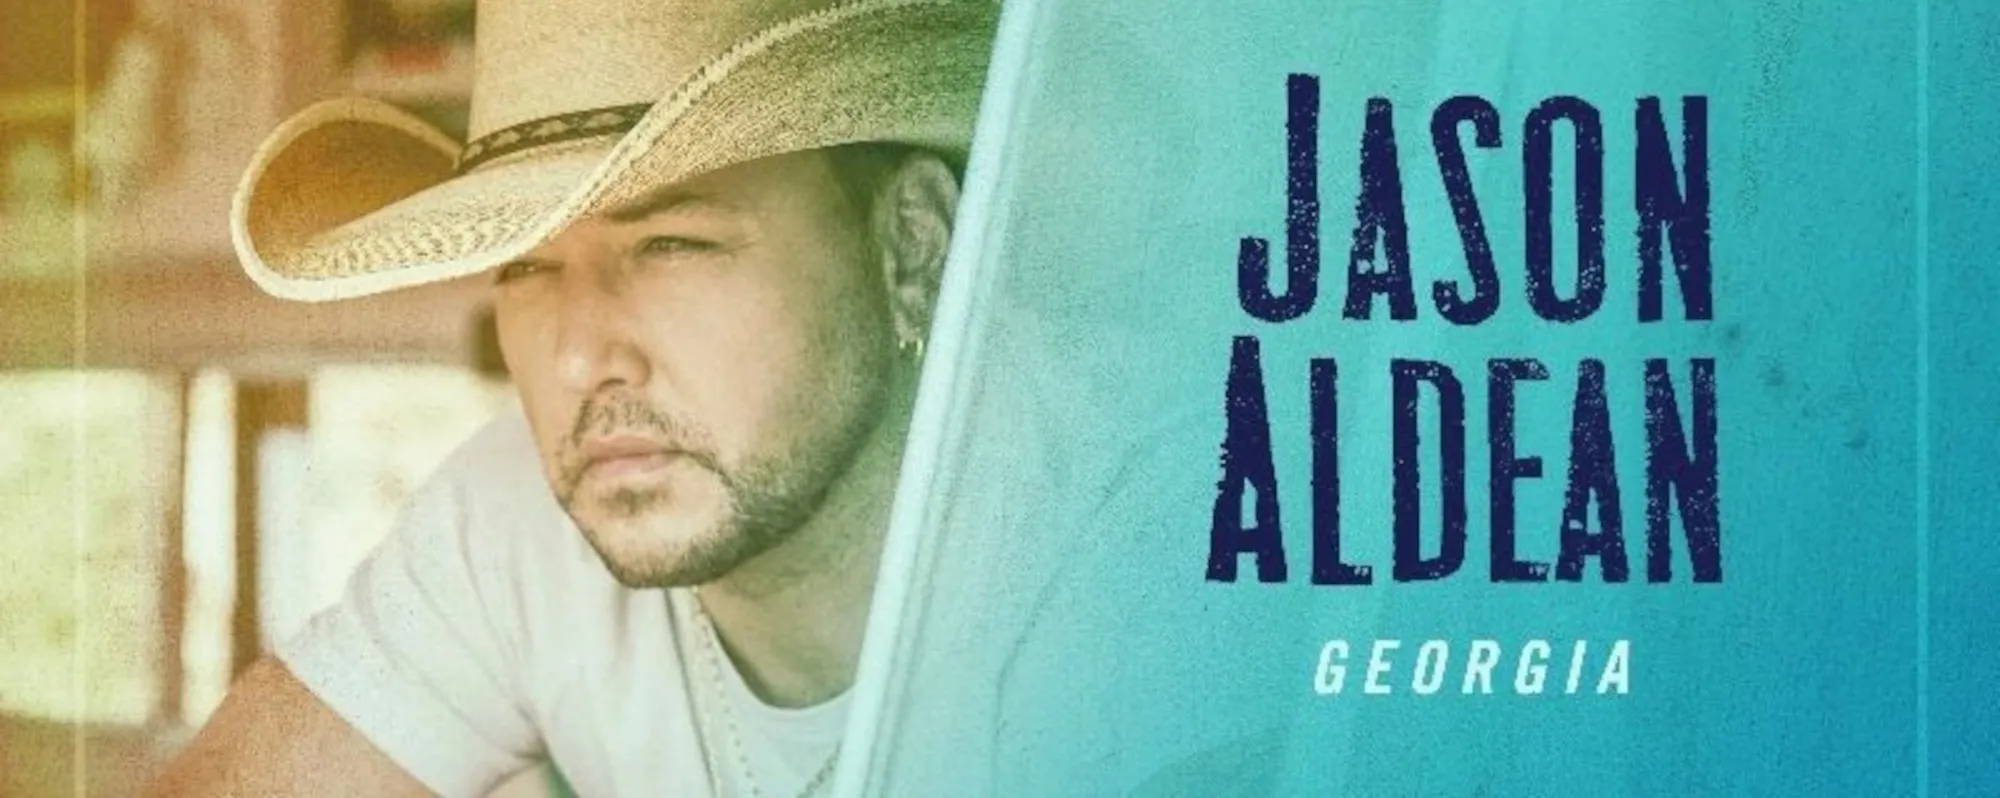 Jason Aldean Reflects on New Album, ‘Georgia’